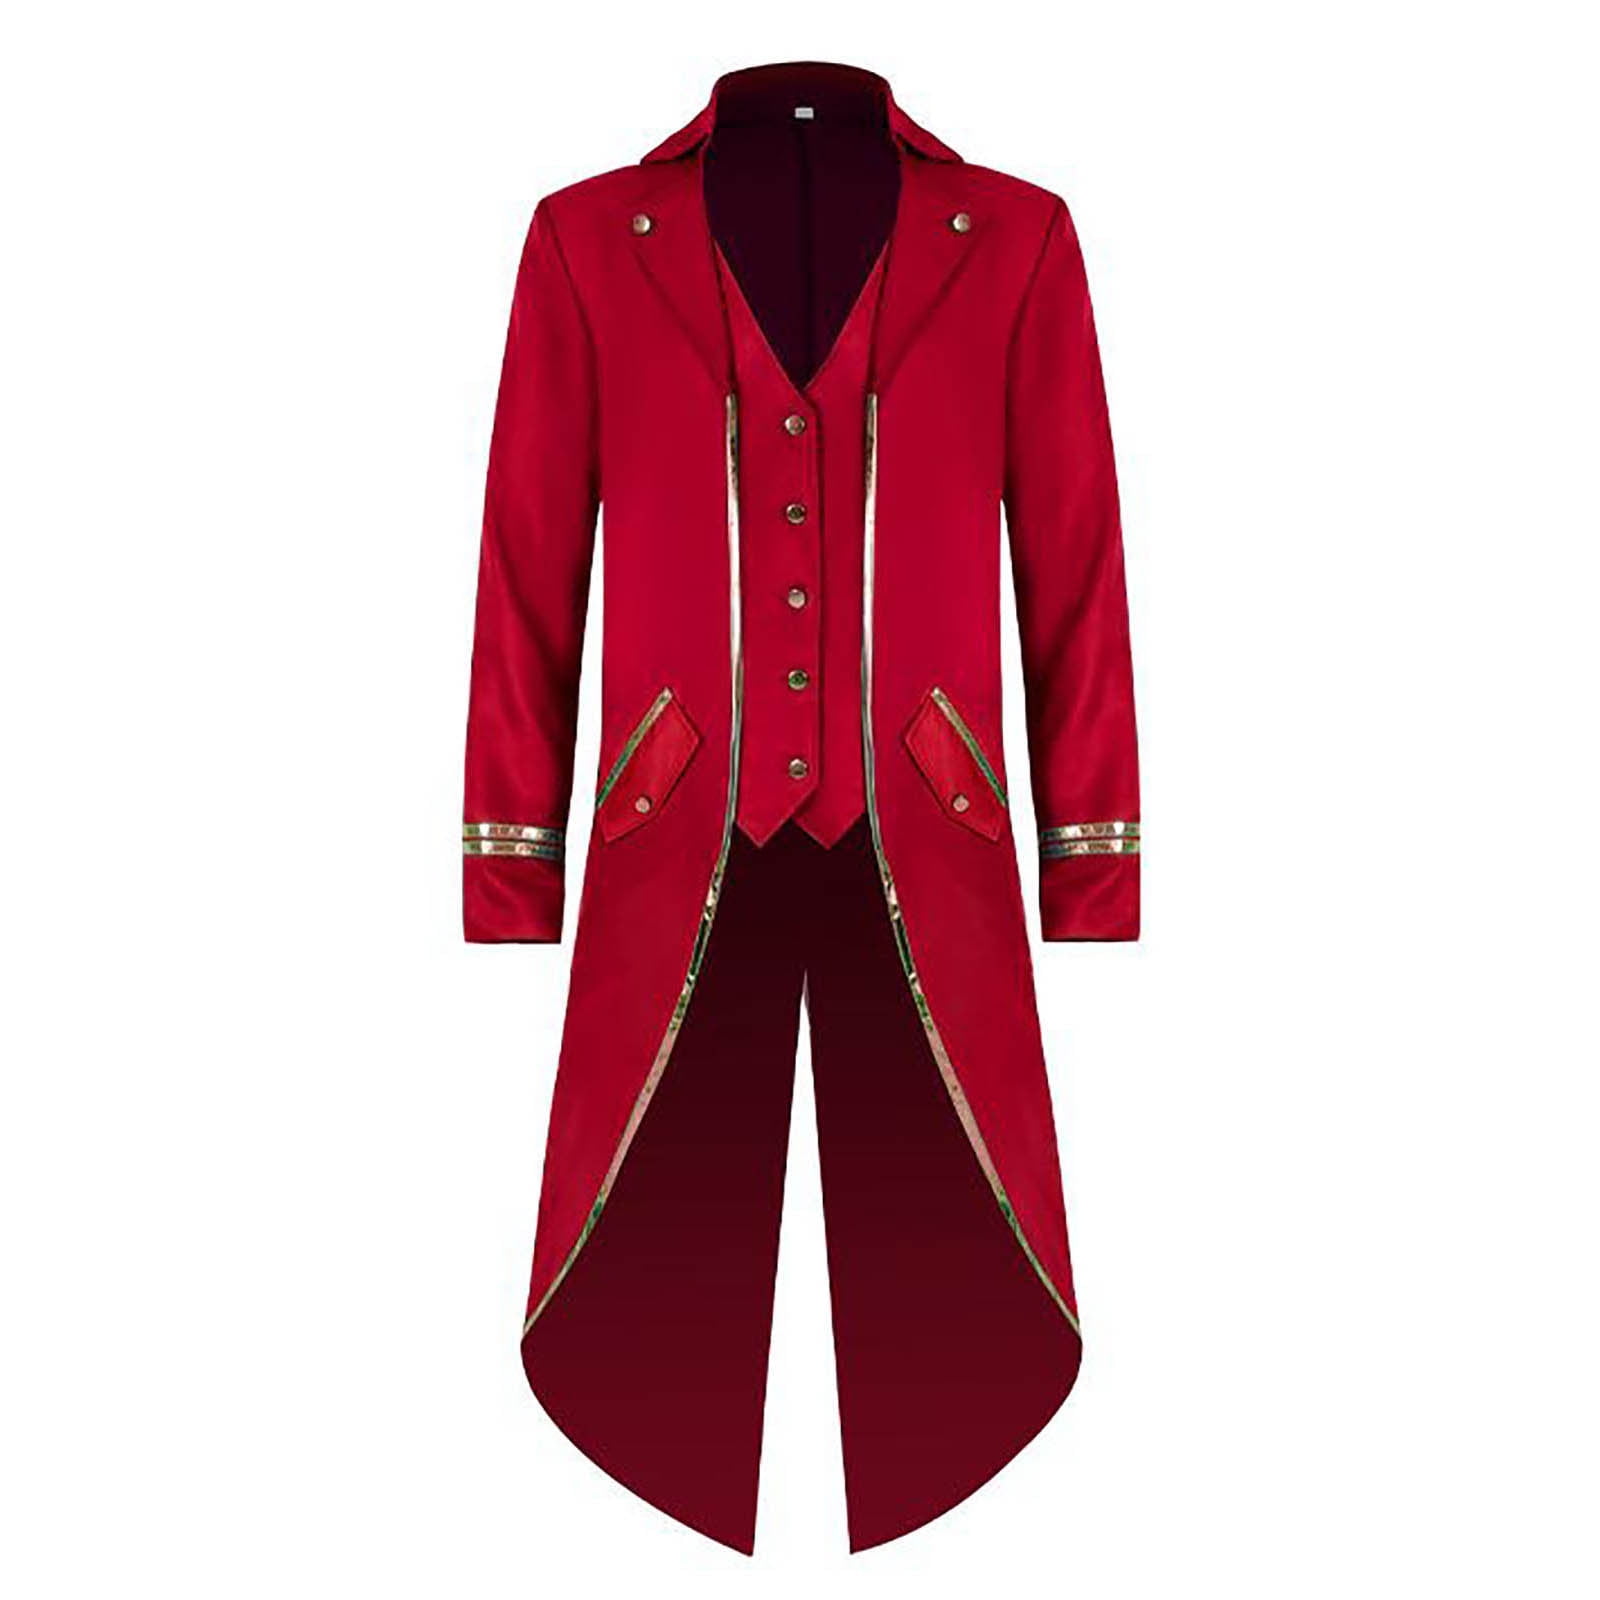 Men's Vintage Tailcoat Jacket Vintage Gothic Victorian Coat Uniform ...